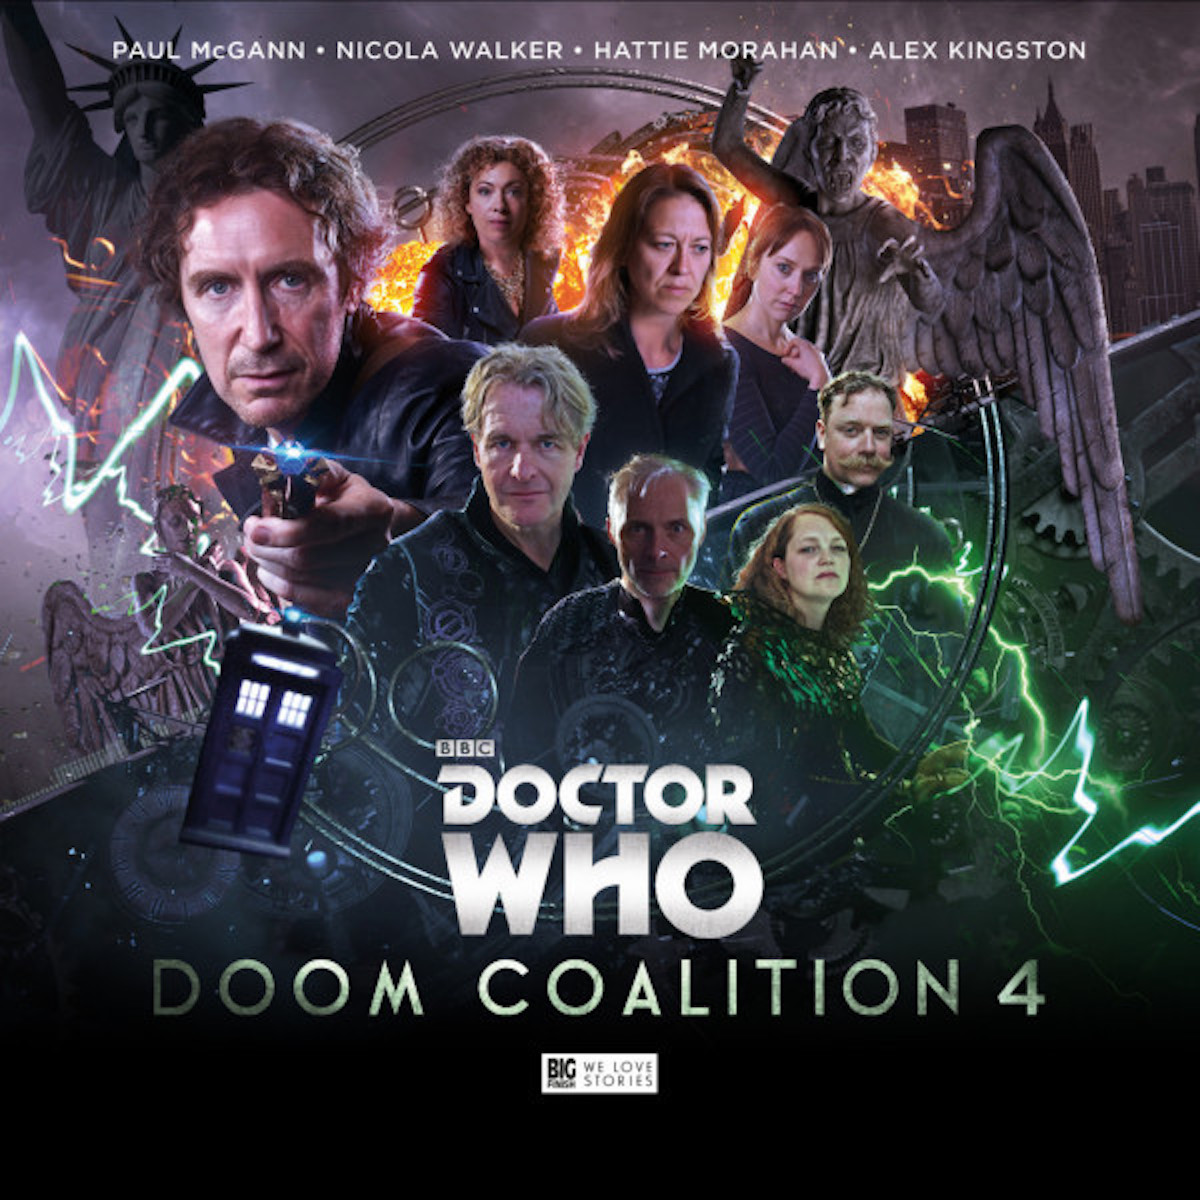 Doom Coalition 4